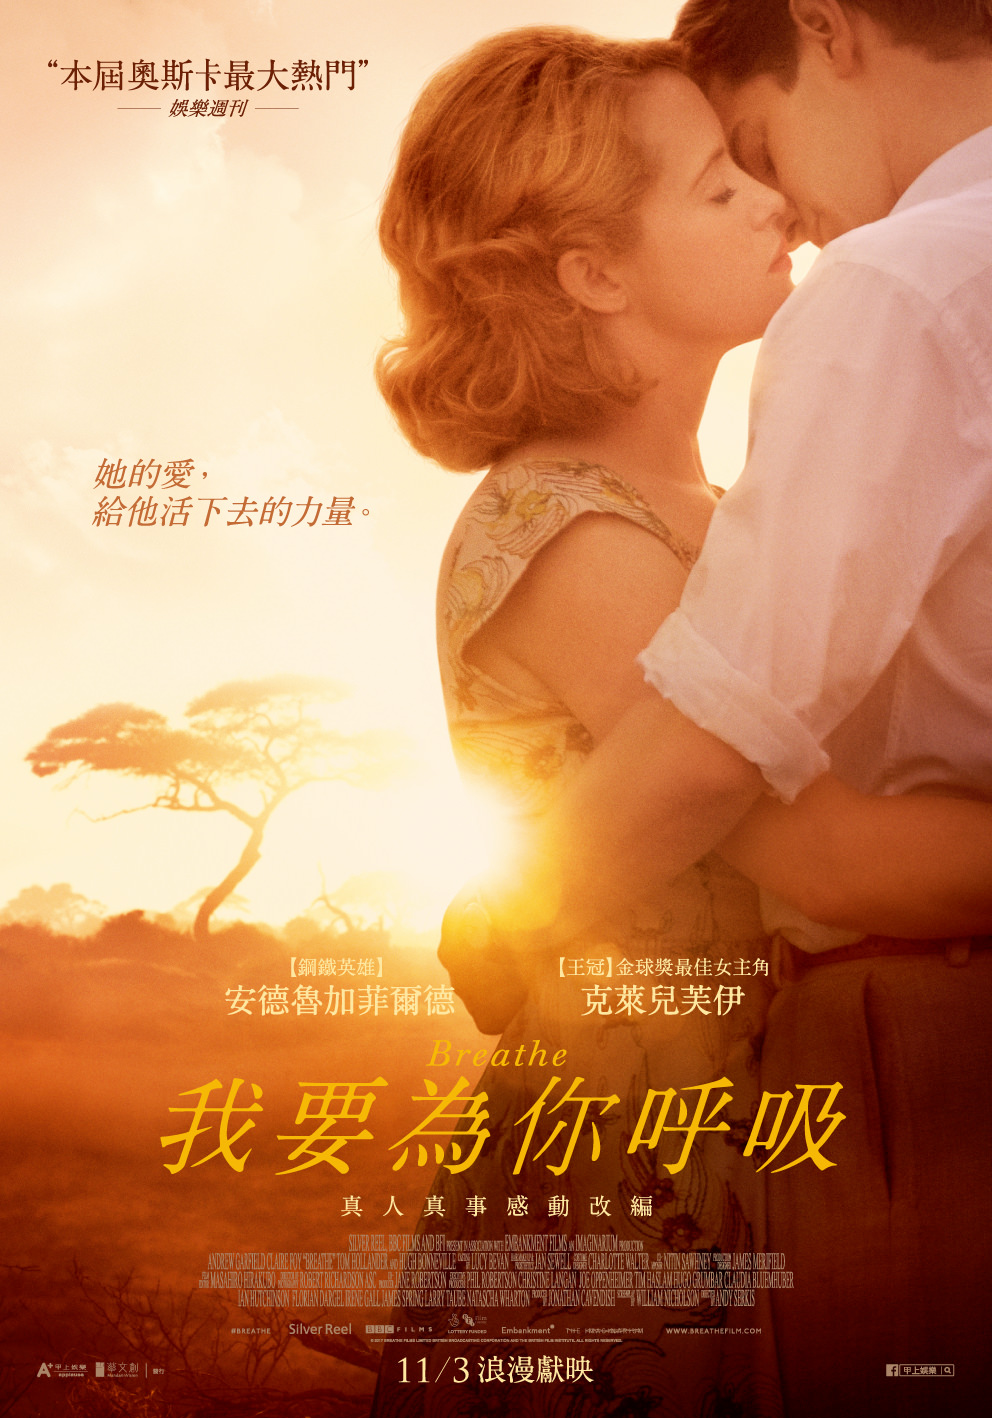 Movie, Breathe(英國, 2017年) / 我要為你呼吸(台灣) / 一呼一吸(網路), 電影海報, 台灣